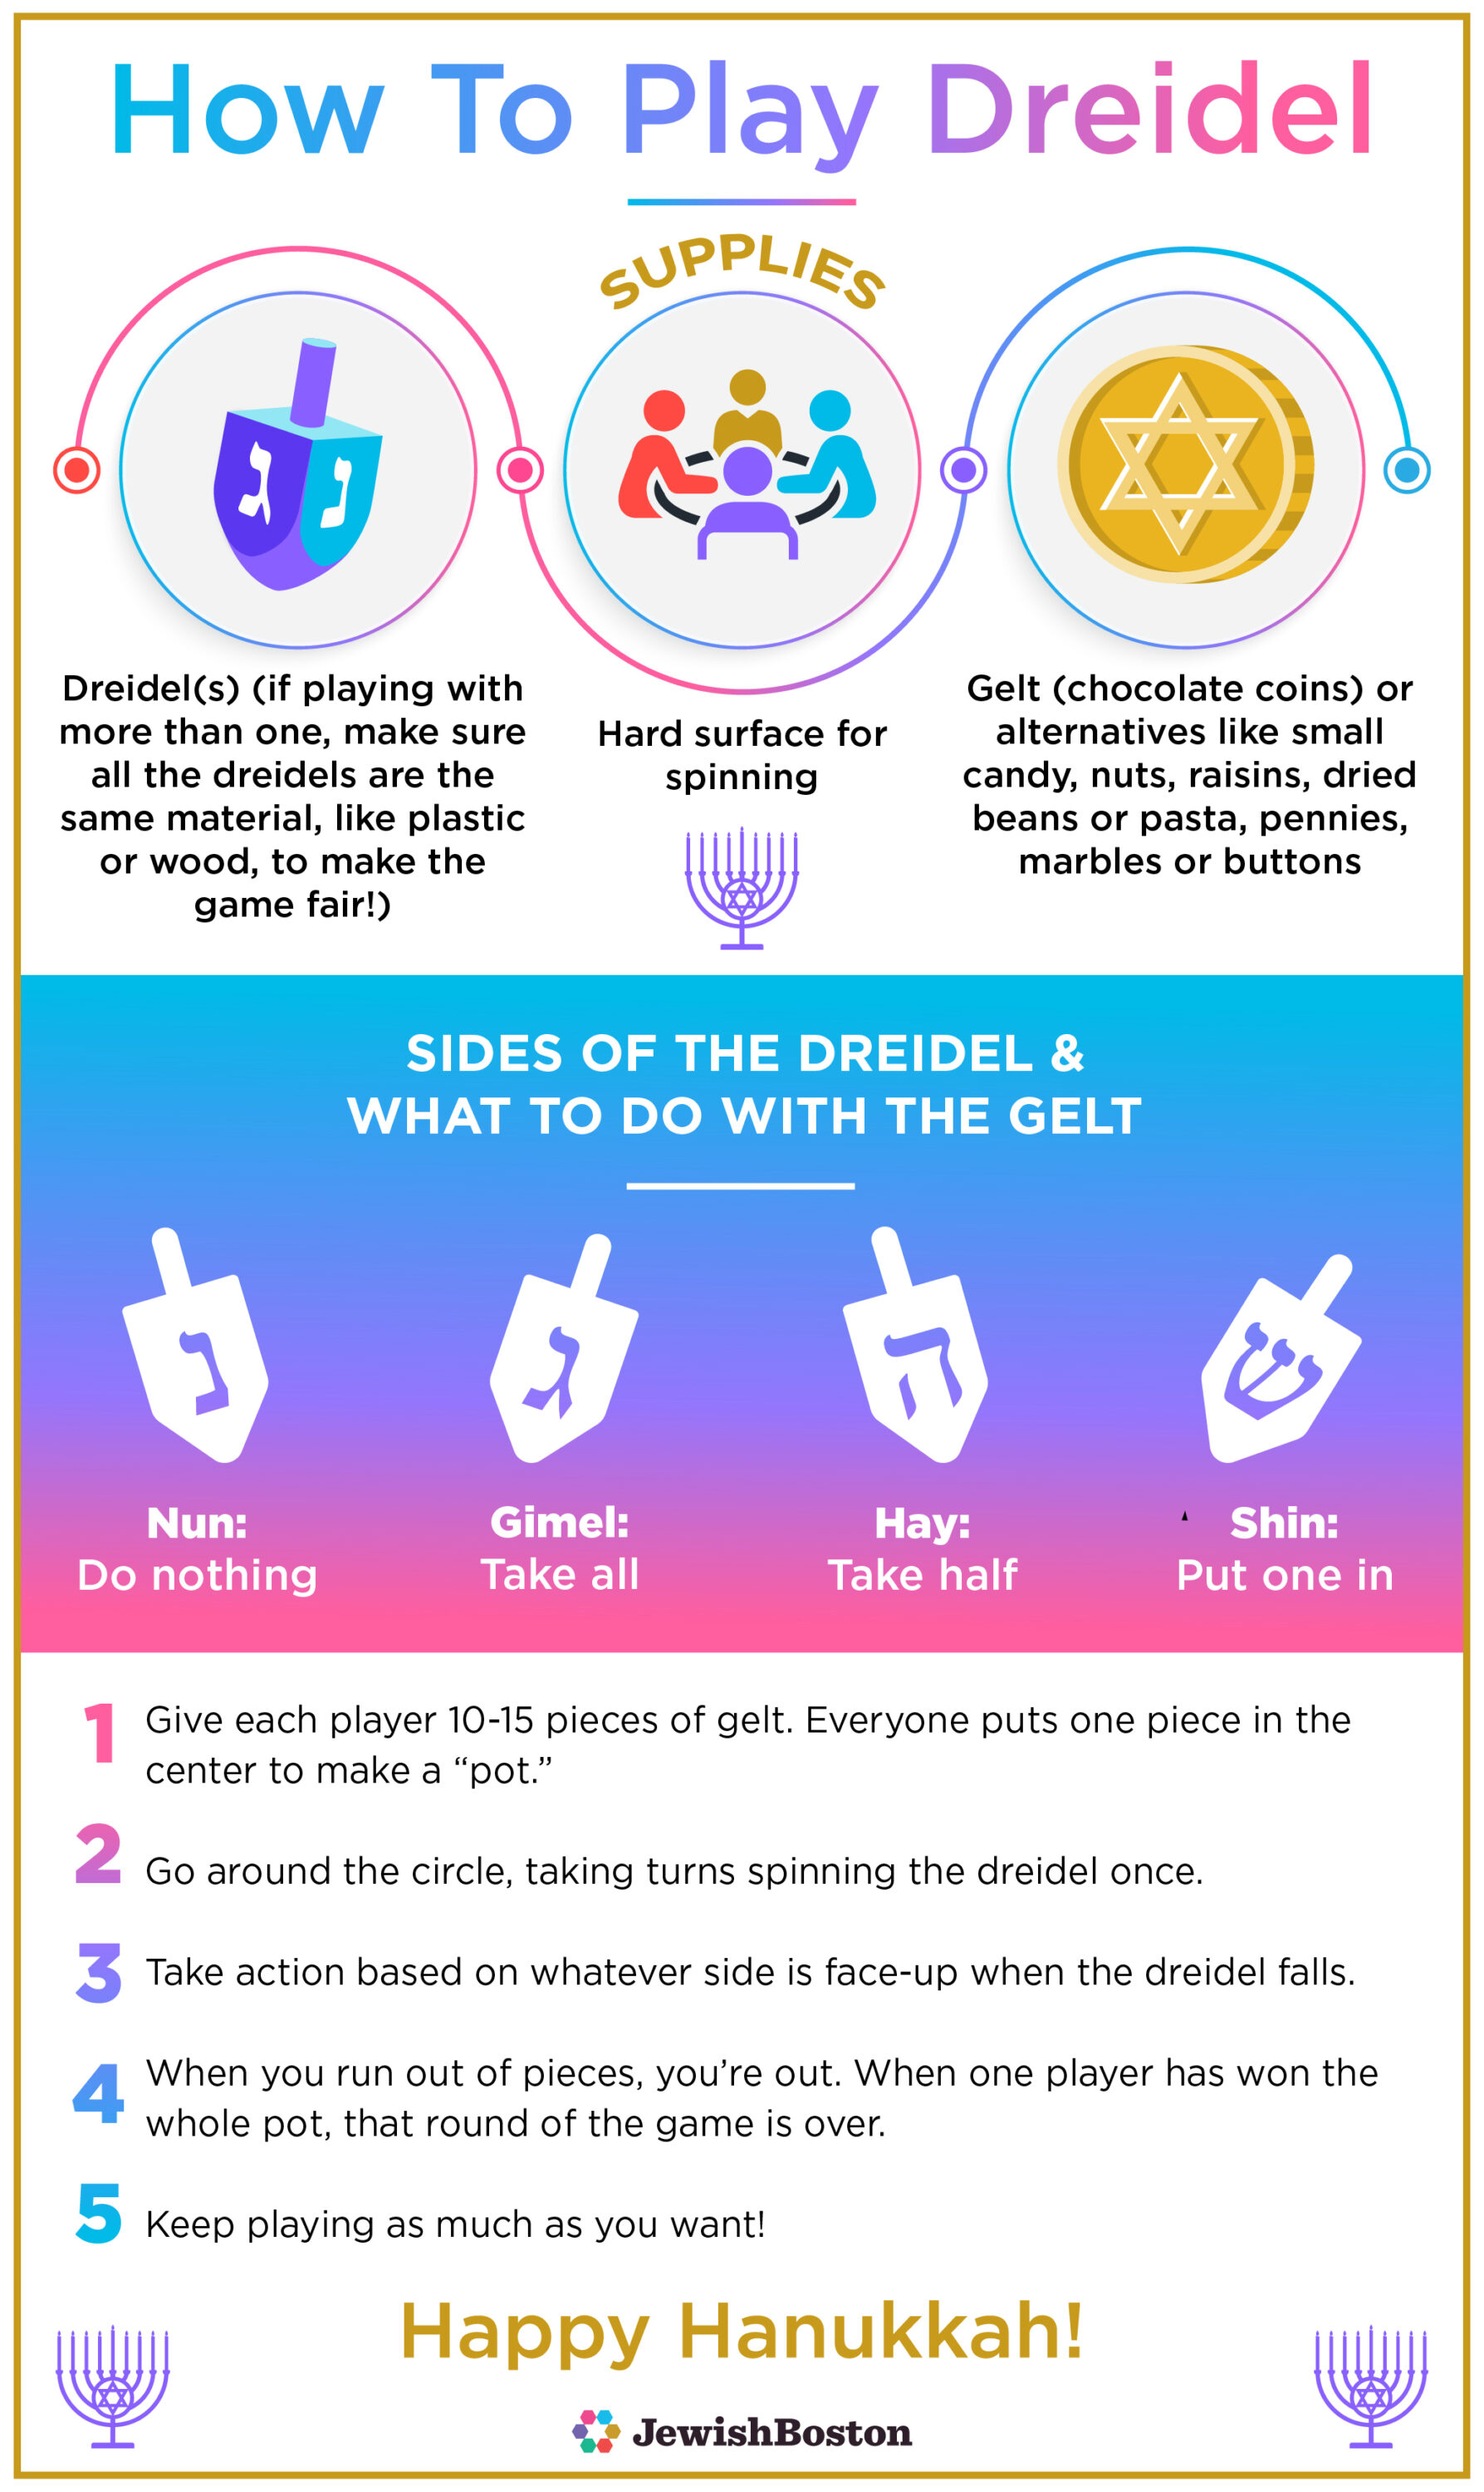 How to play dreidel infographic by JewishBoston-01